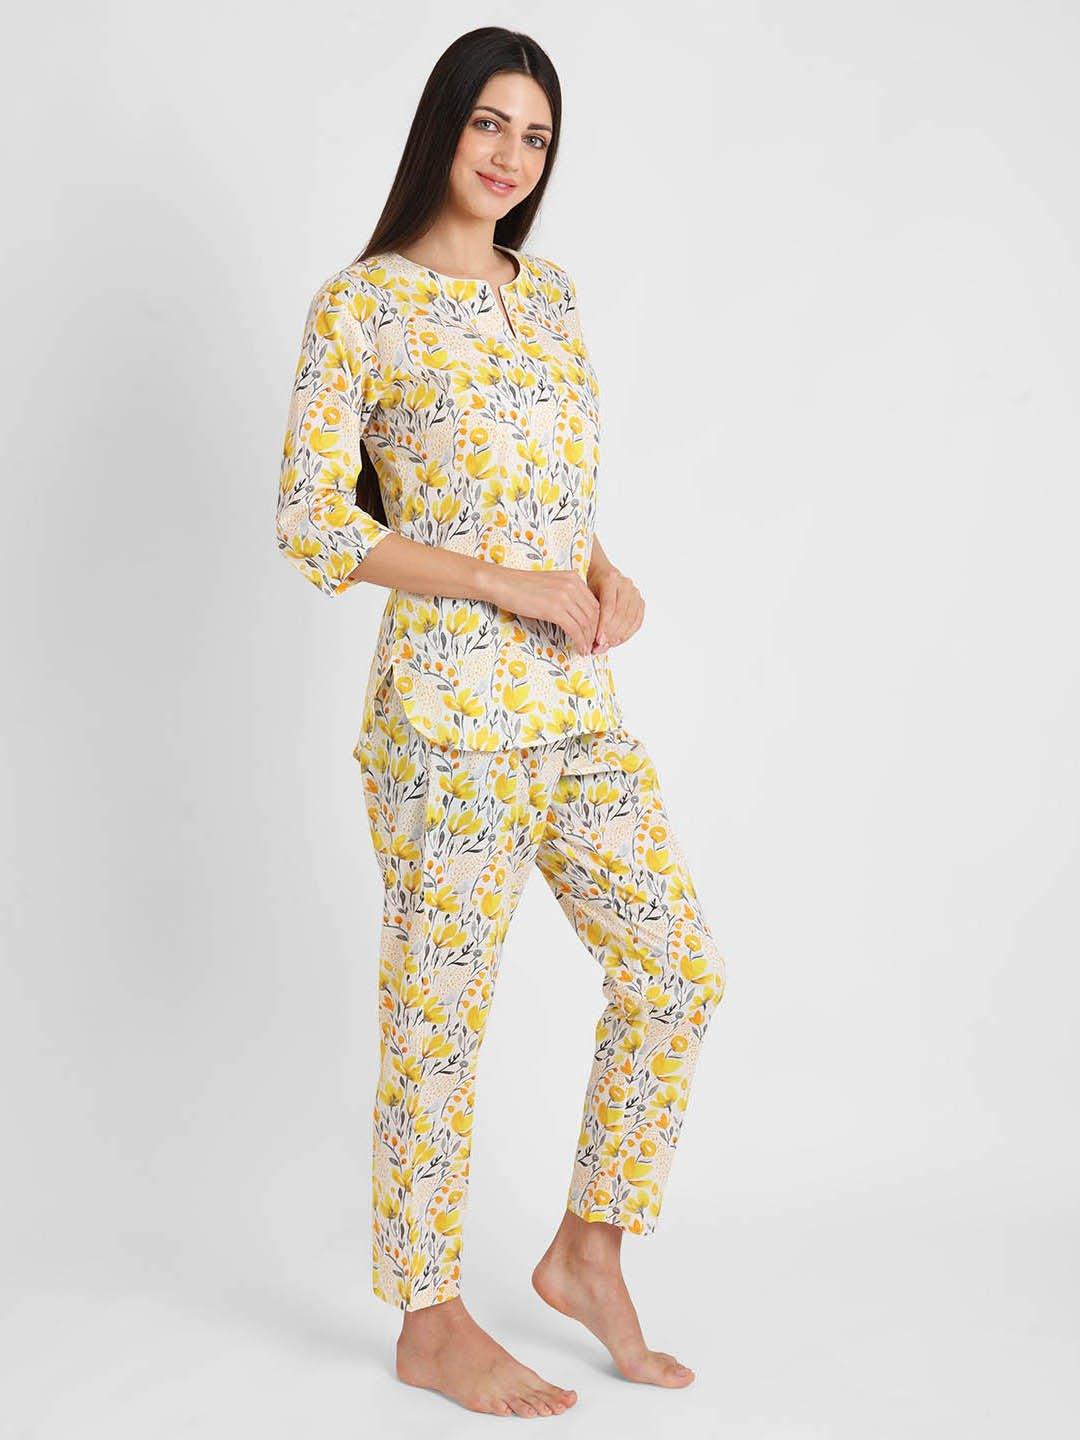 Yellow Tint Printed Nightsuit Set for Women